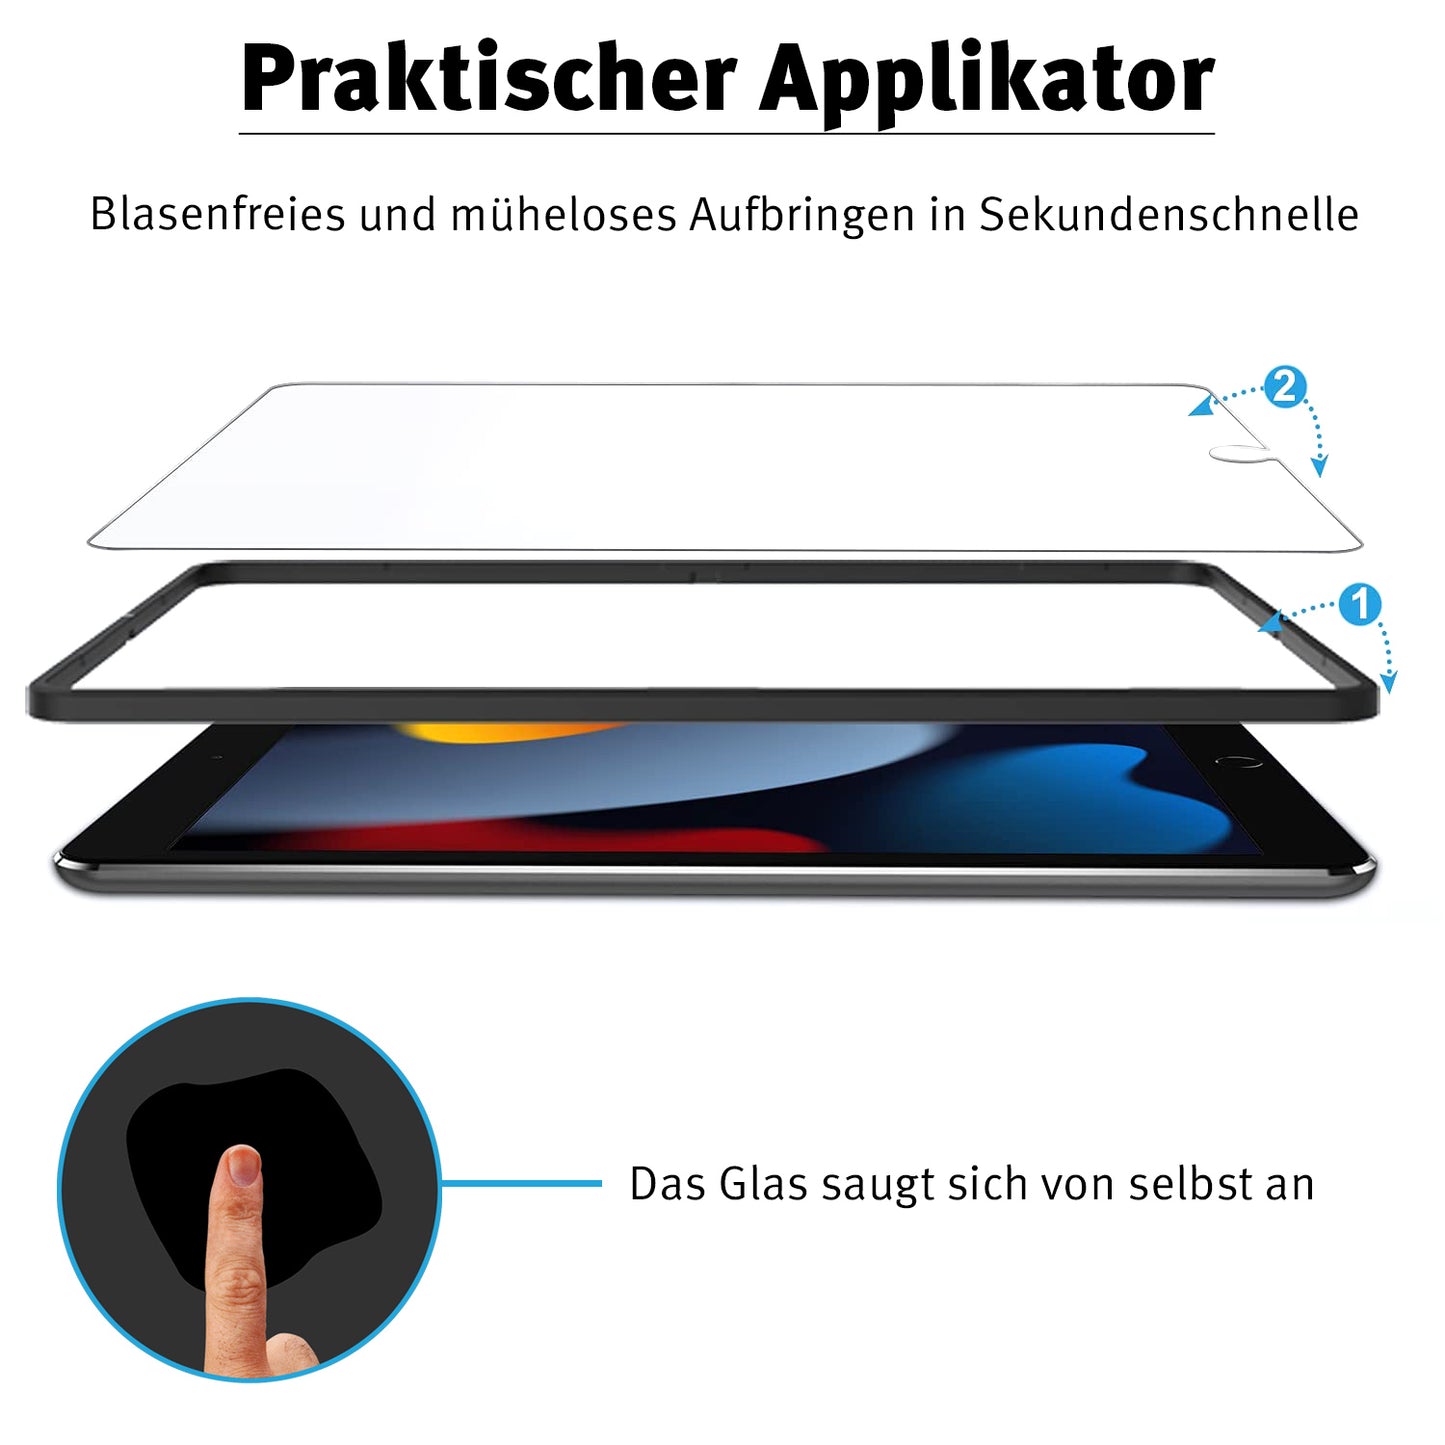 ArktisPRO PaperFeel iPad Pro 12,9“ (2018-2020-2021-2022) PREMIUM Schutzglas